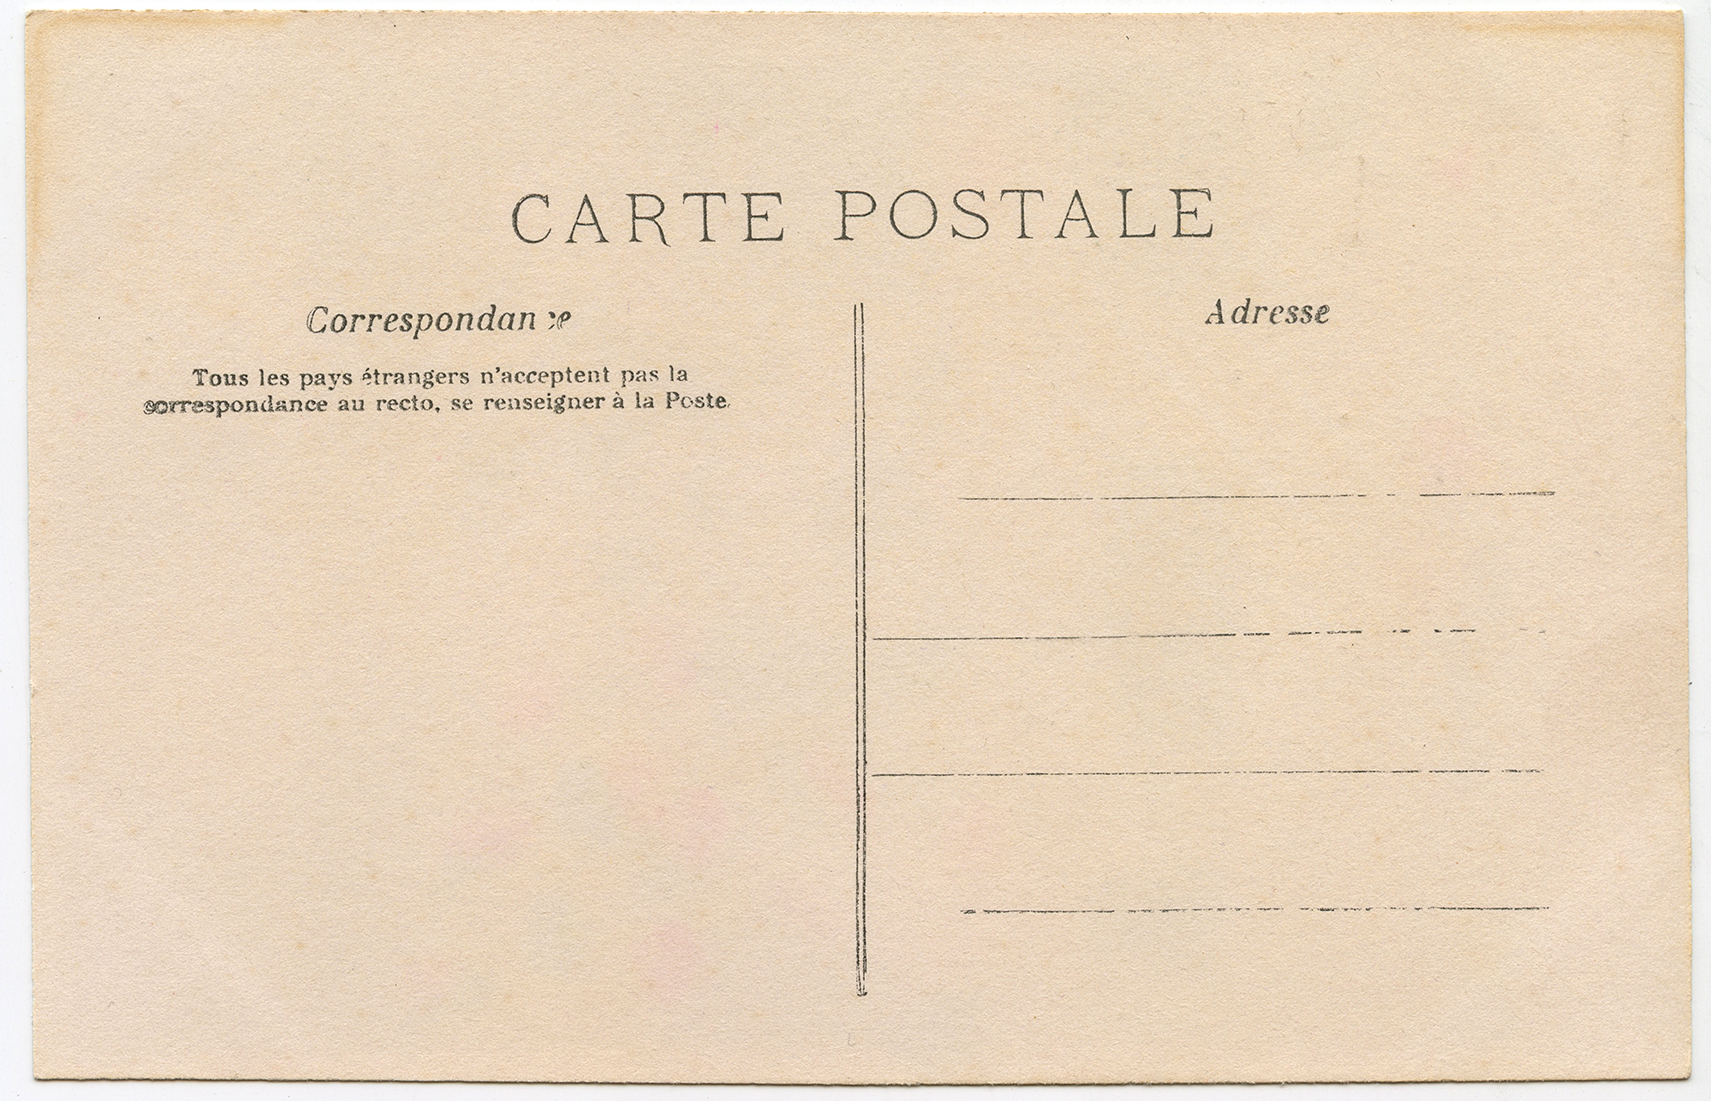 Carte Postale Plain